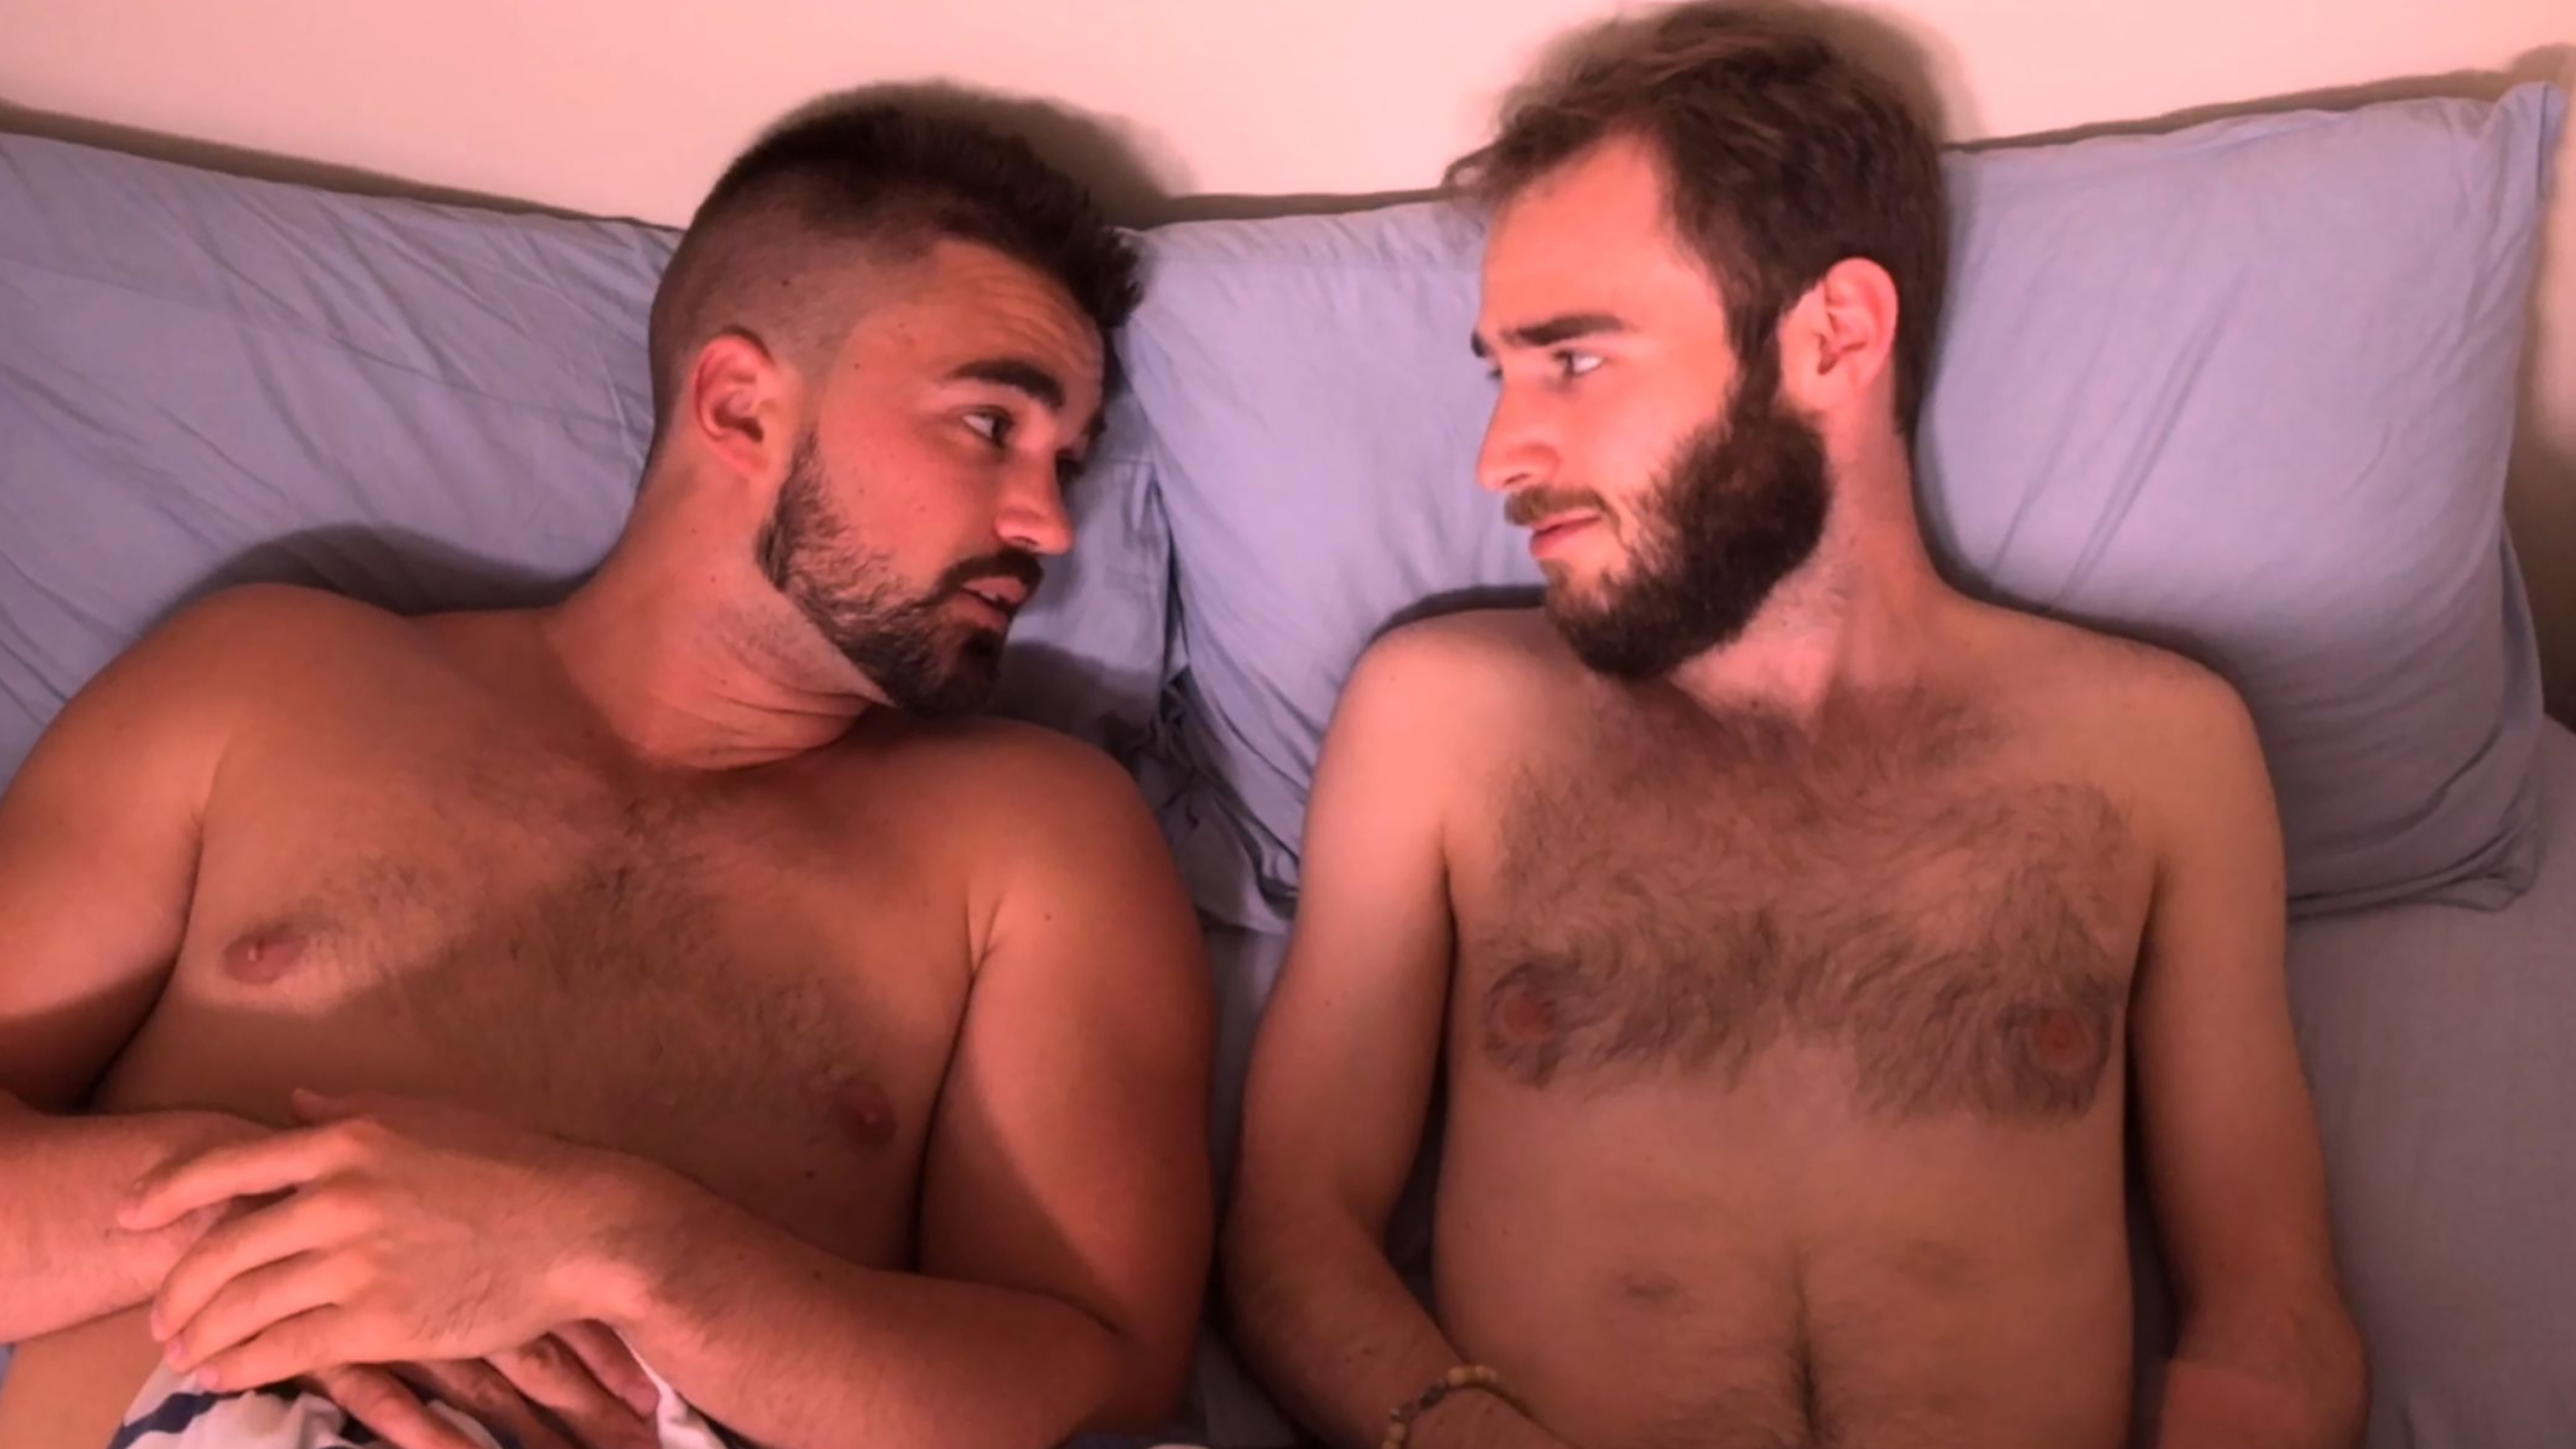 two gay men naked